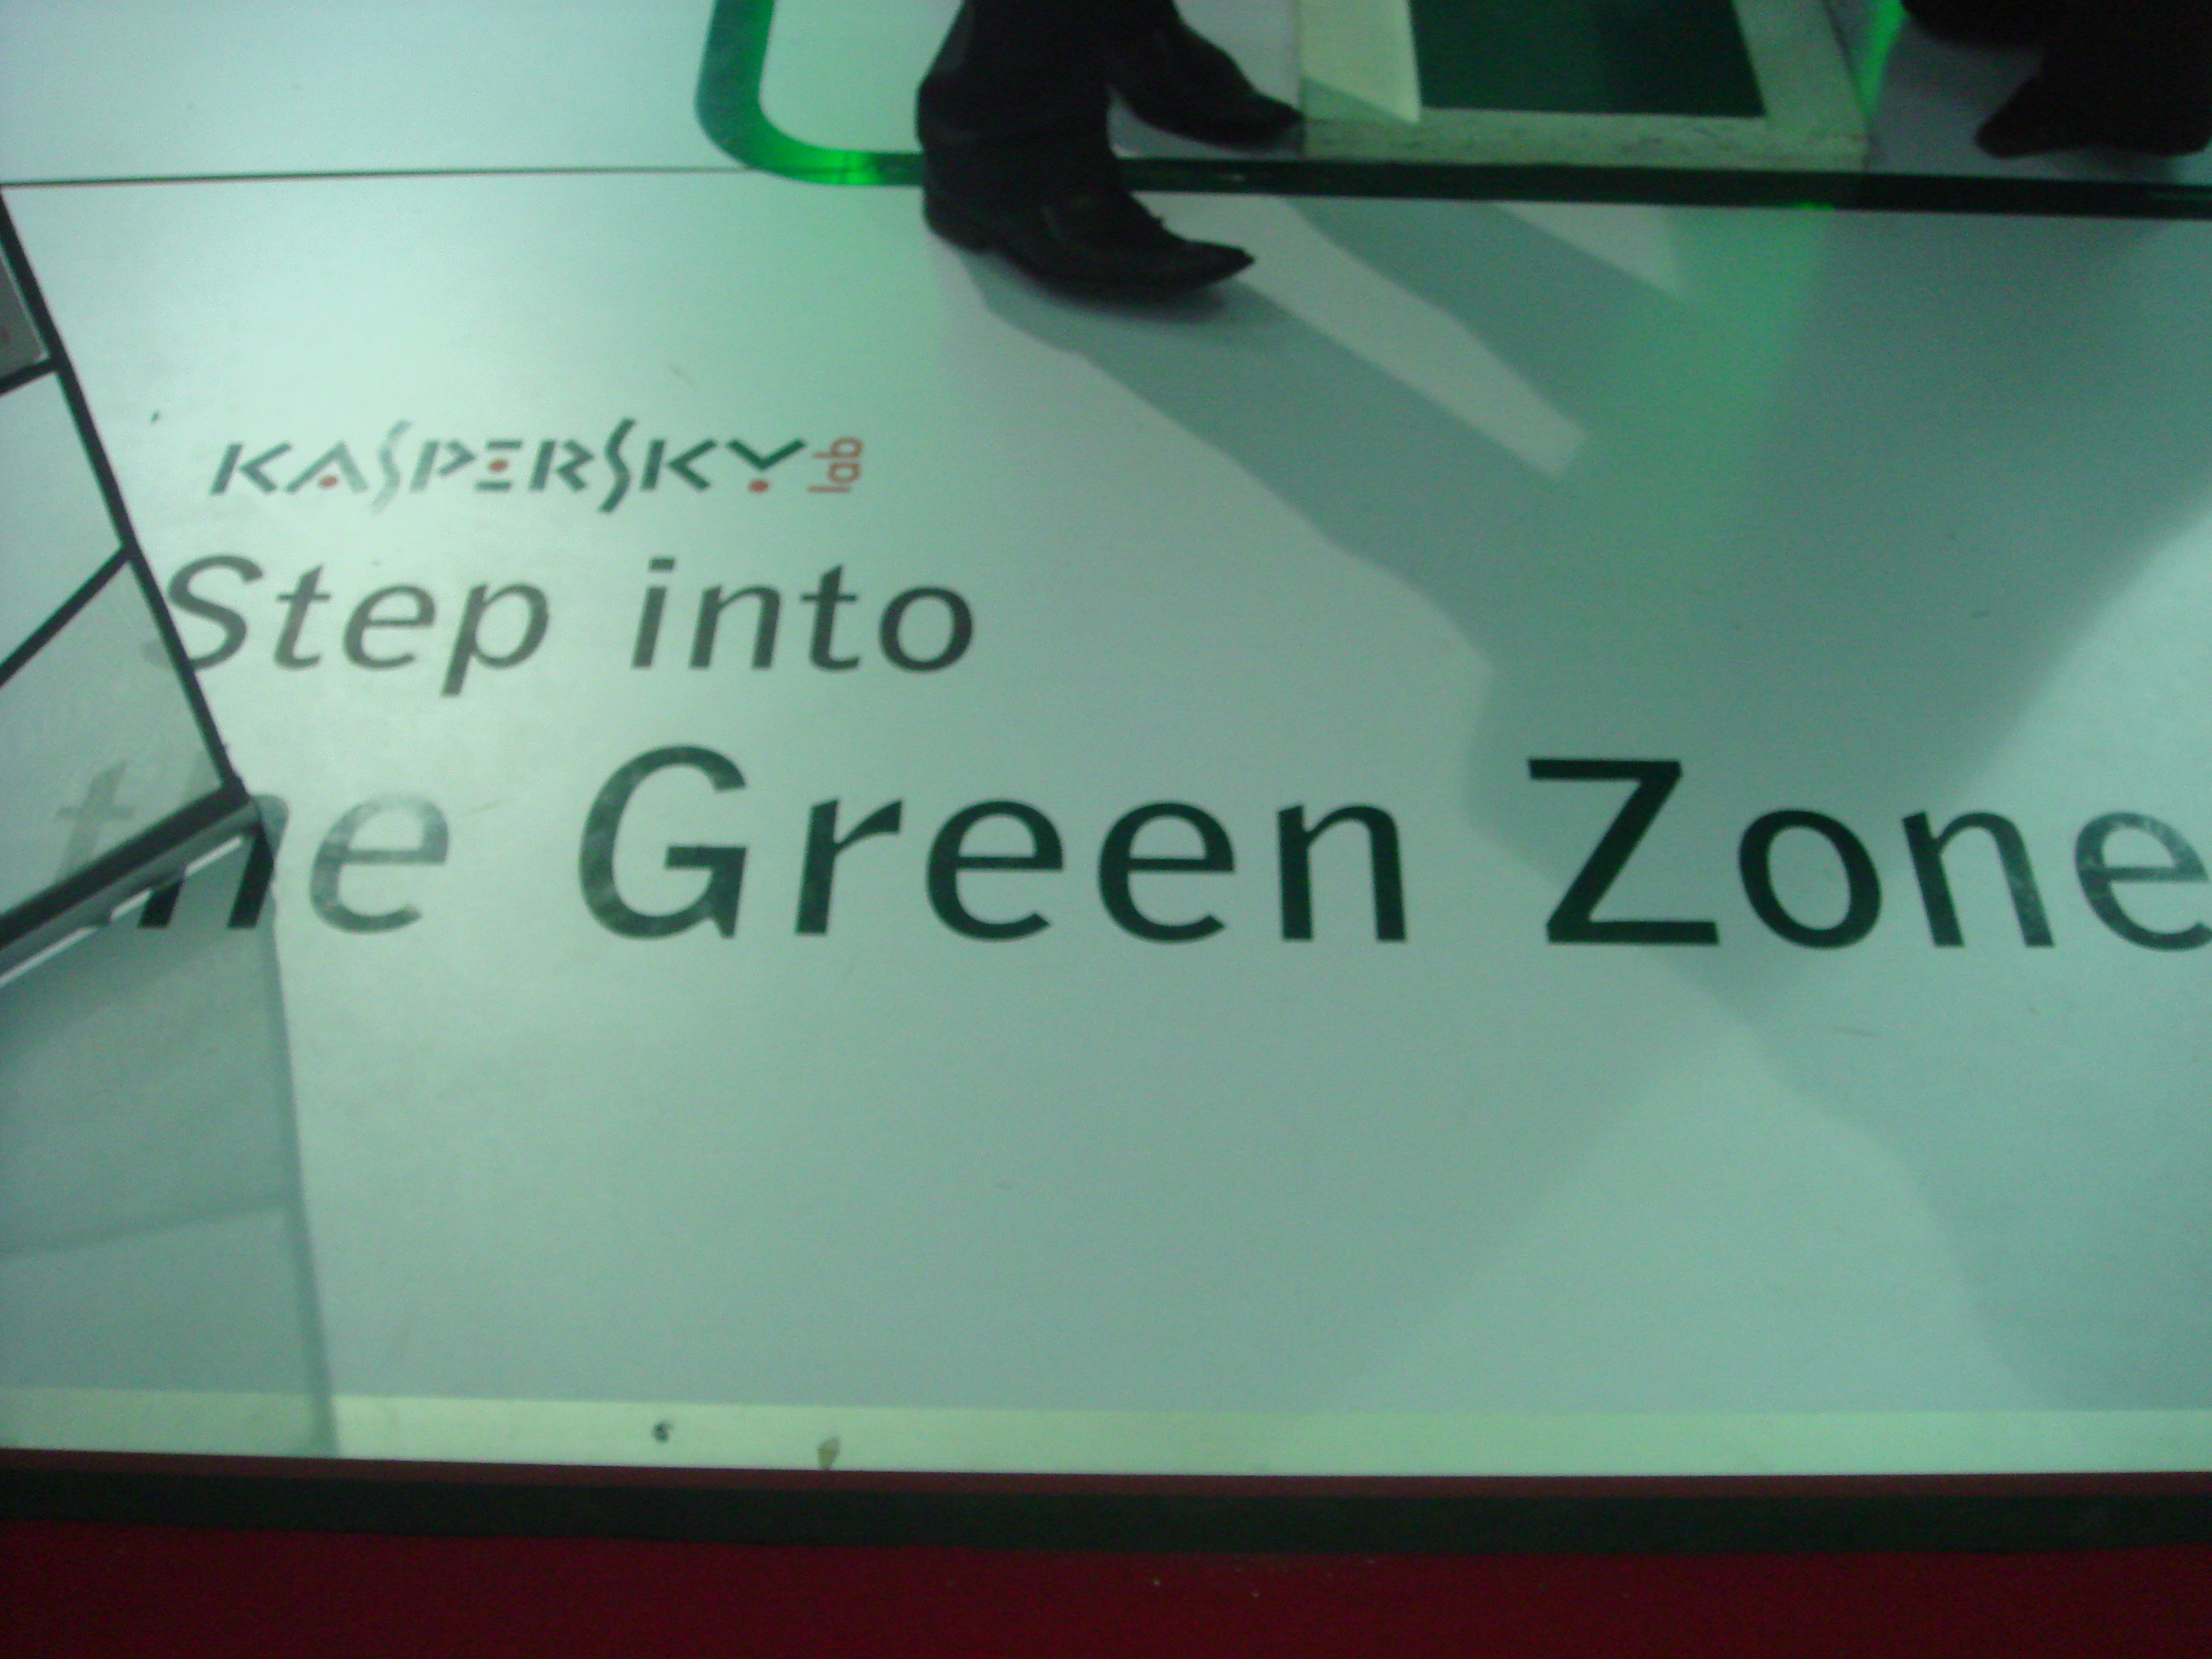 Kaspersky فى Cairo ICT 2010 "تقدم الى المنطقة الخضراء" 2